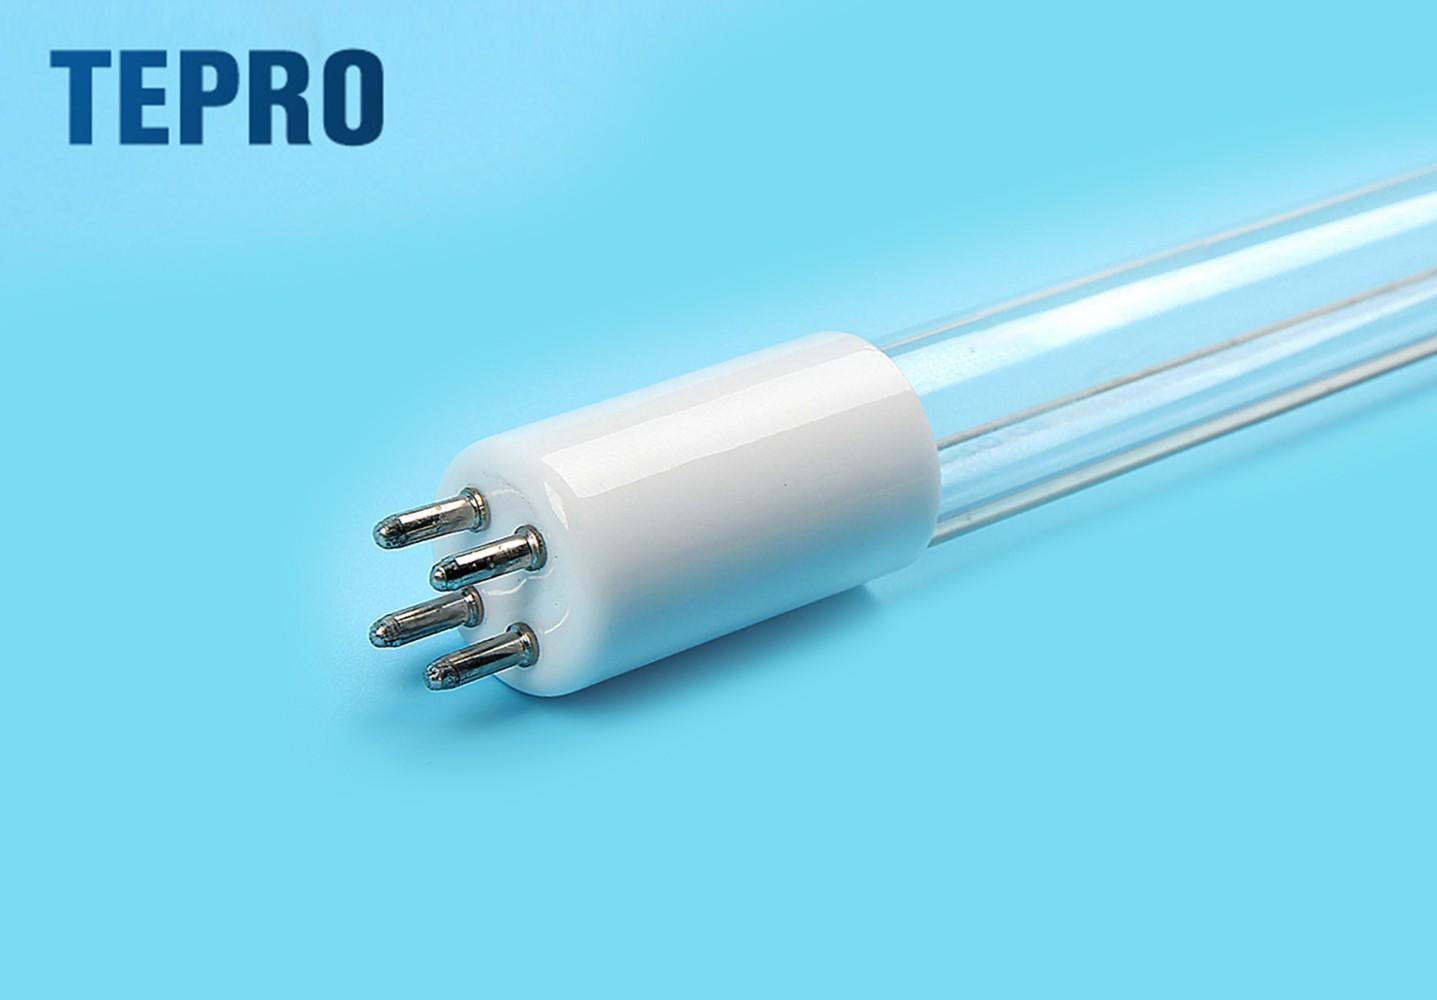 Tepro uv light lamp for nails types for reptiles-1